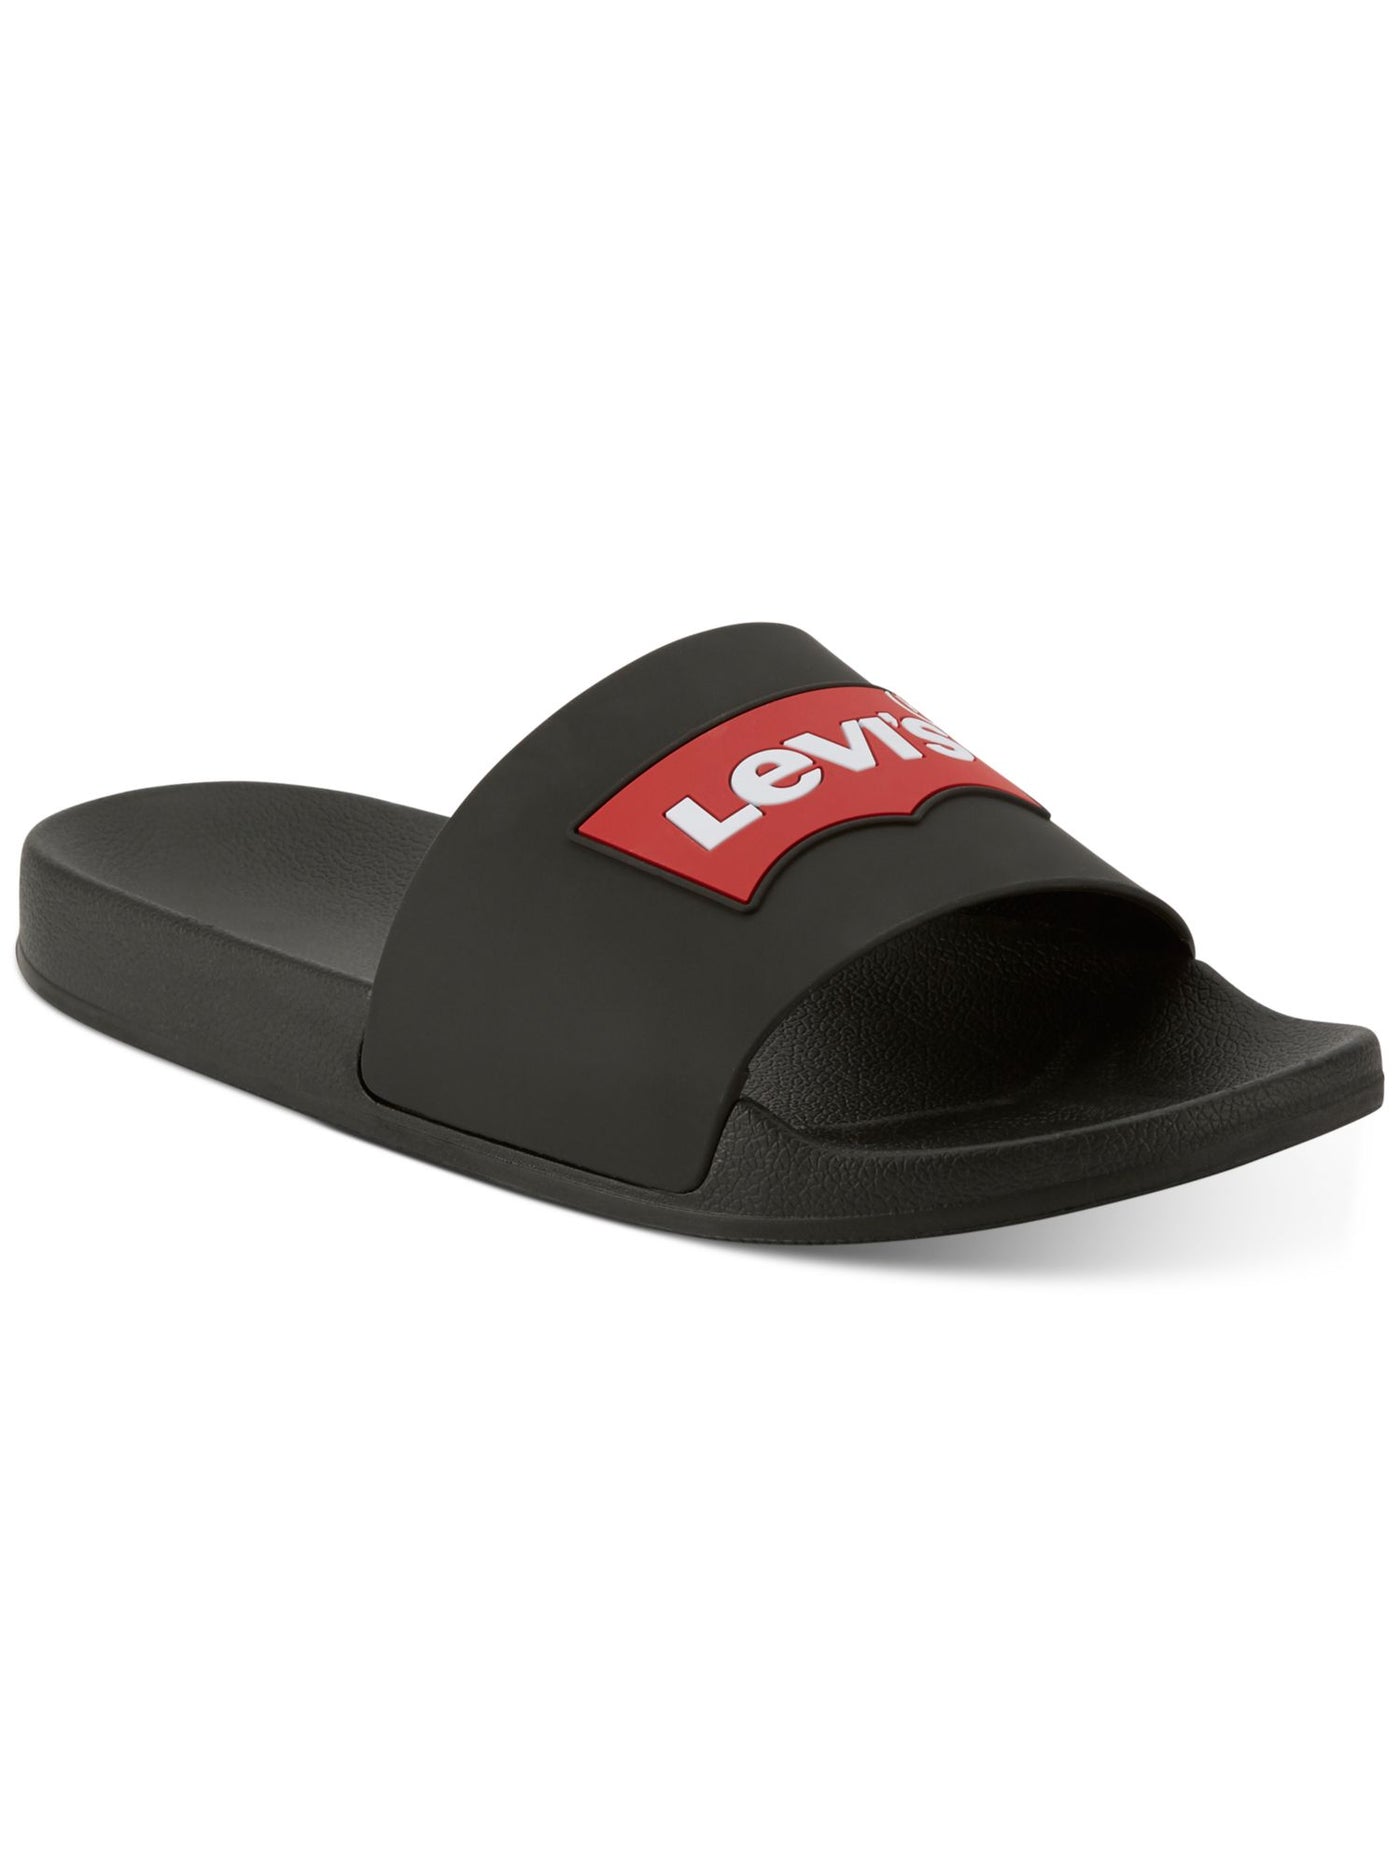 LEVI'S Mens Black Padded Batwing-logo Open Toe Slip On Slide Sandals Shoes 12